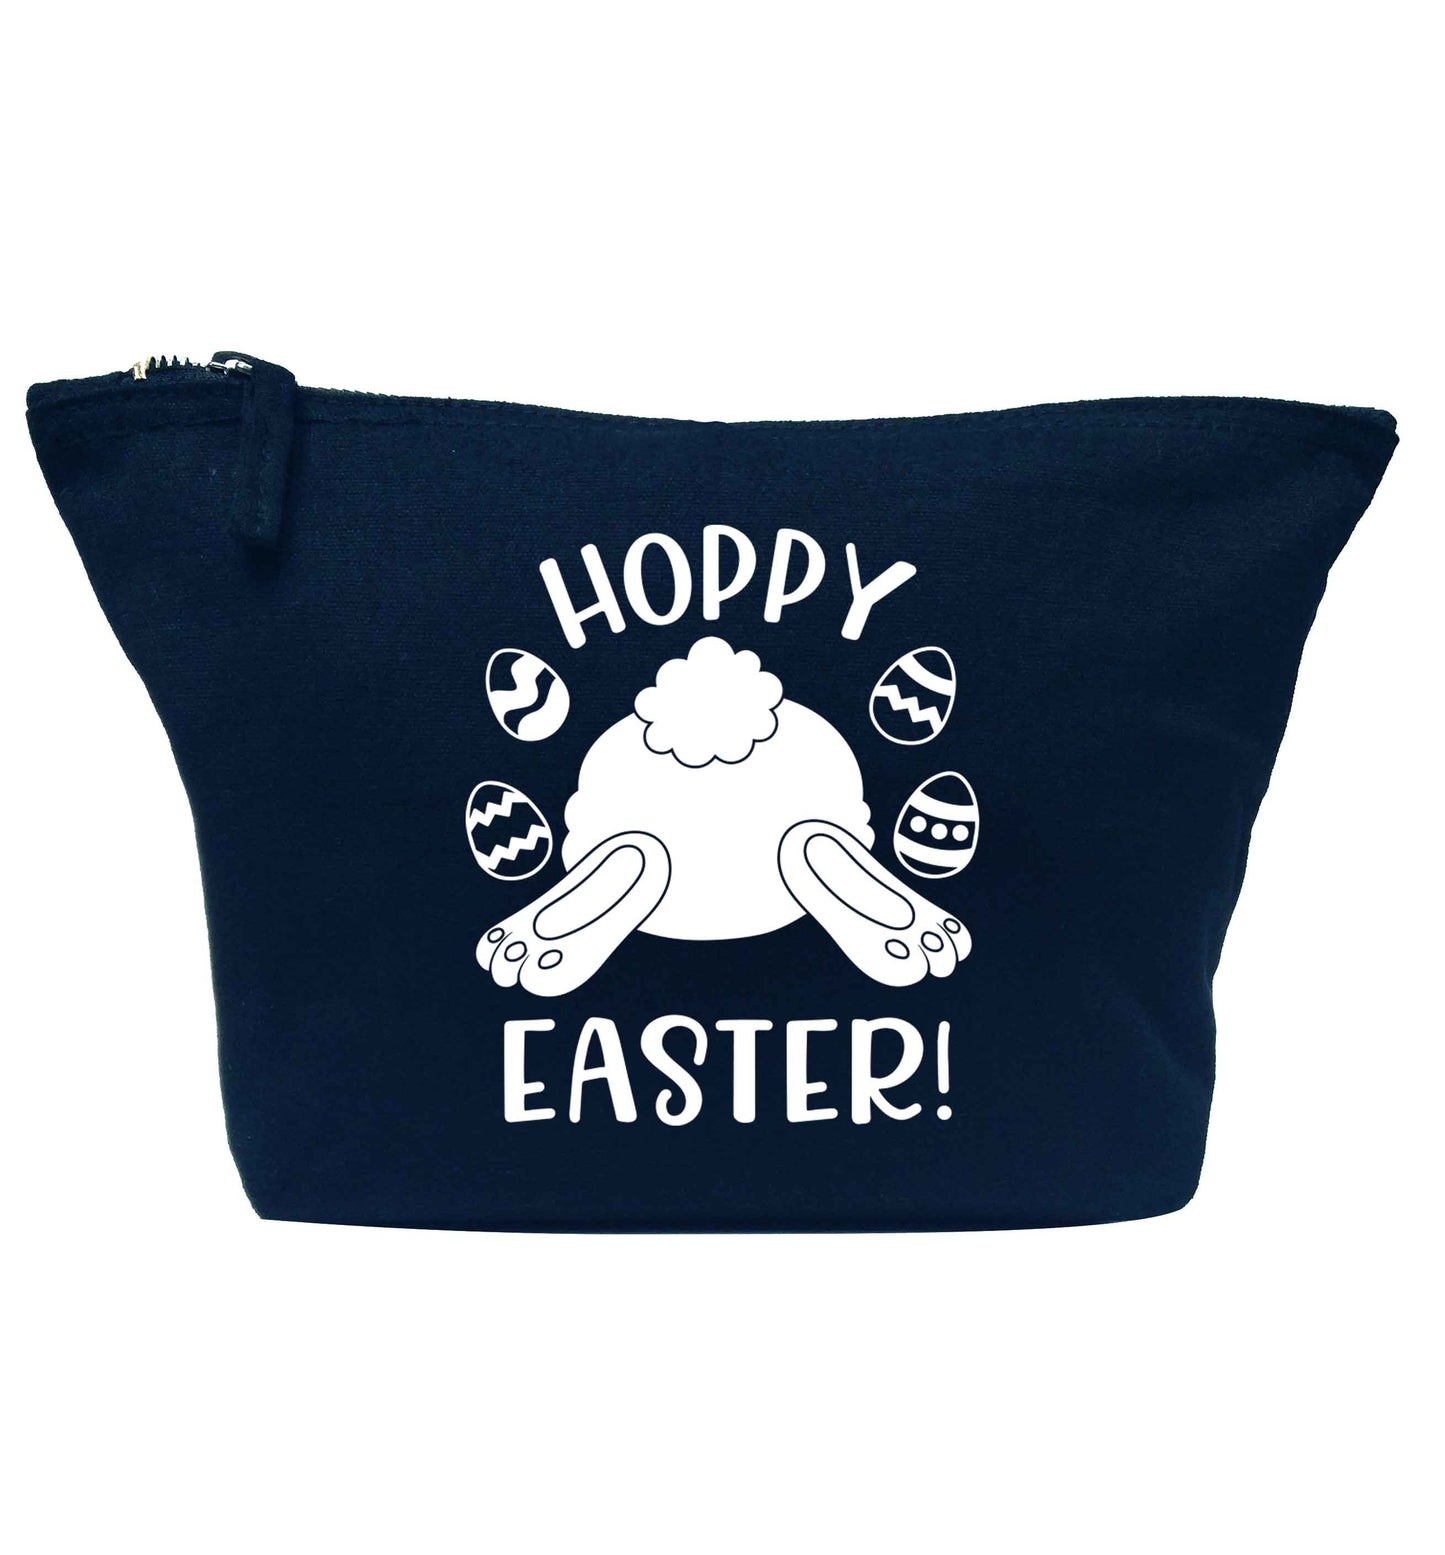 Hoppy Easter navy makeup bag